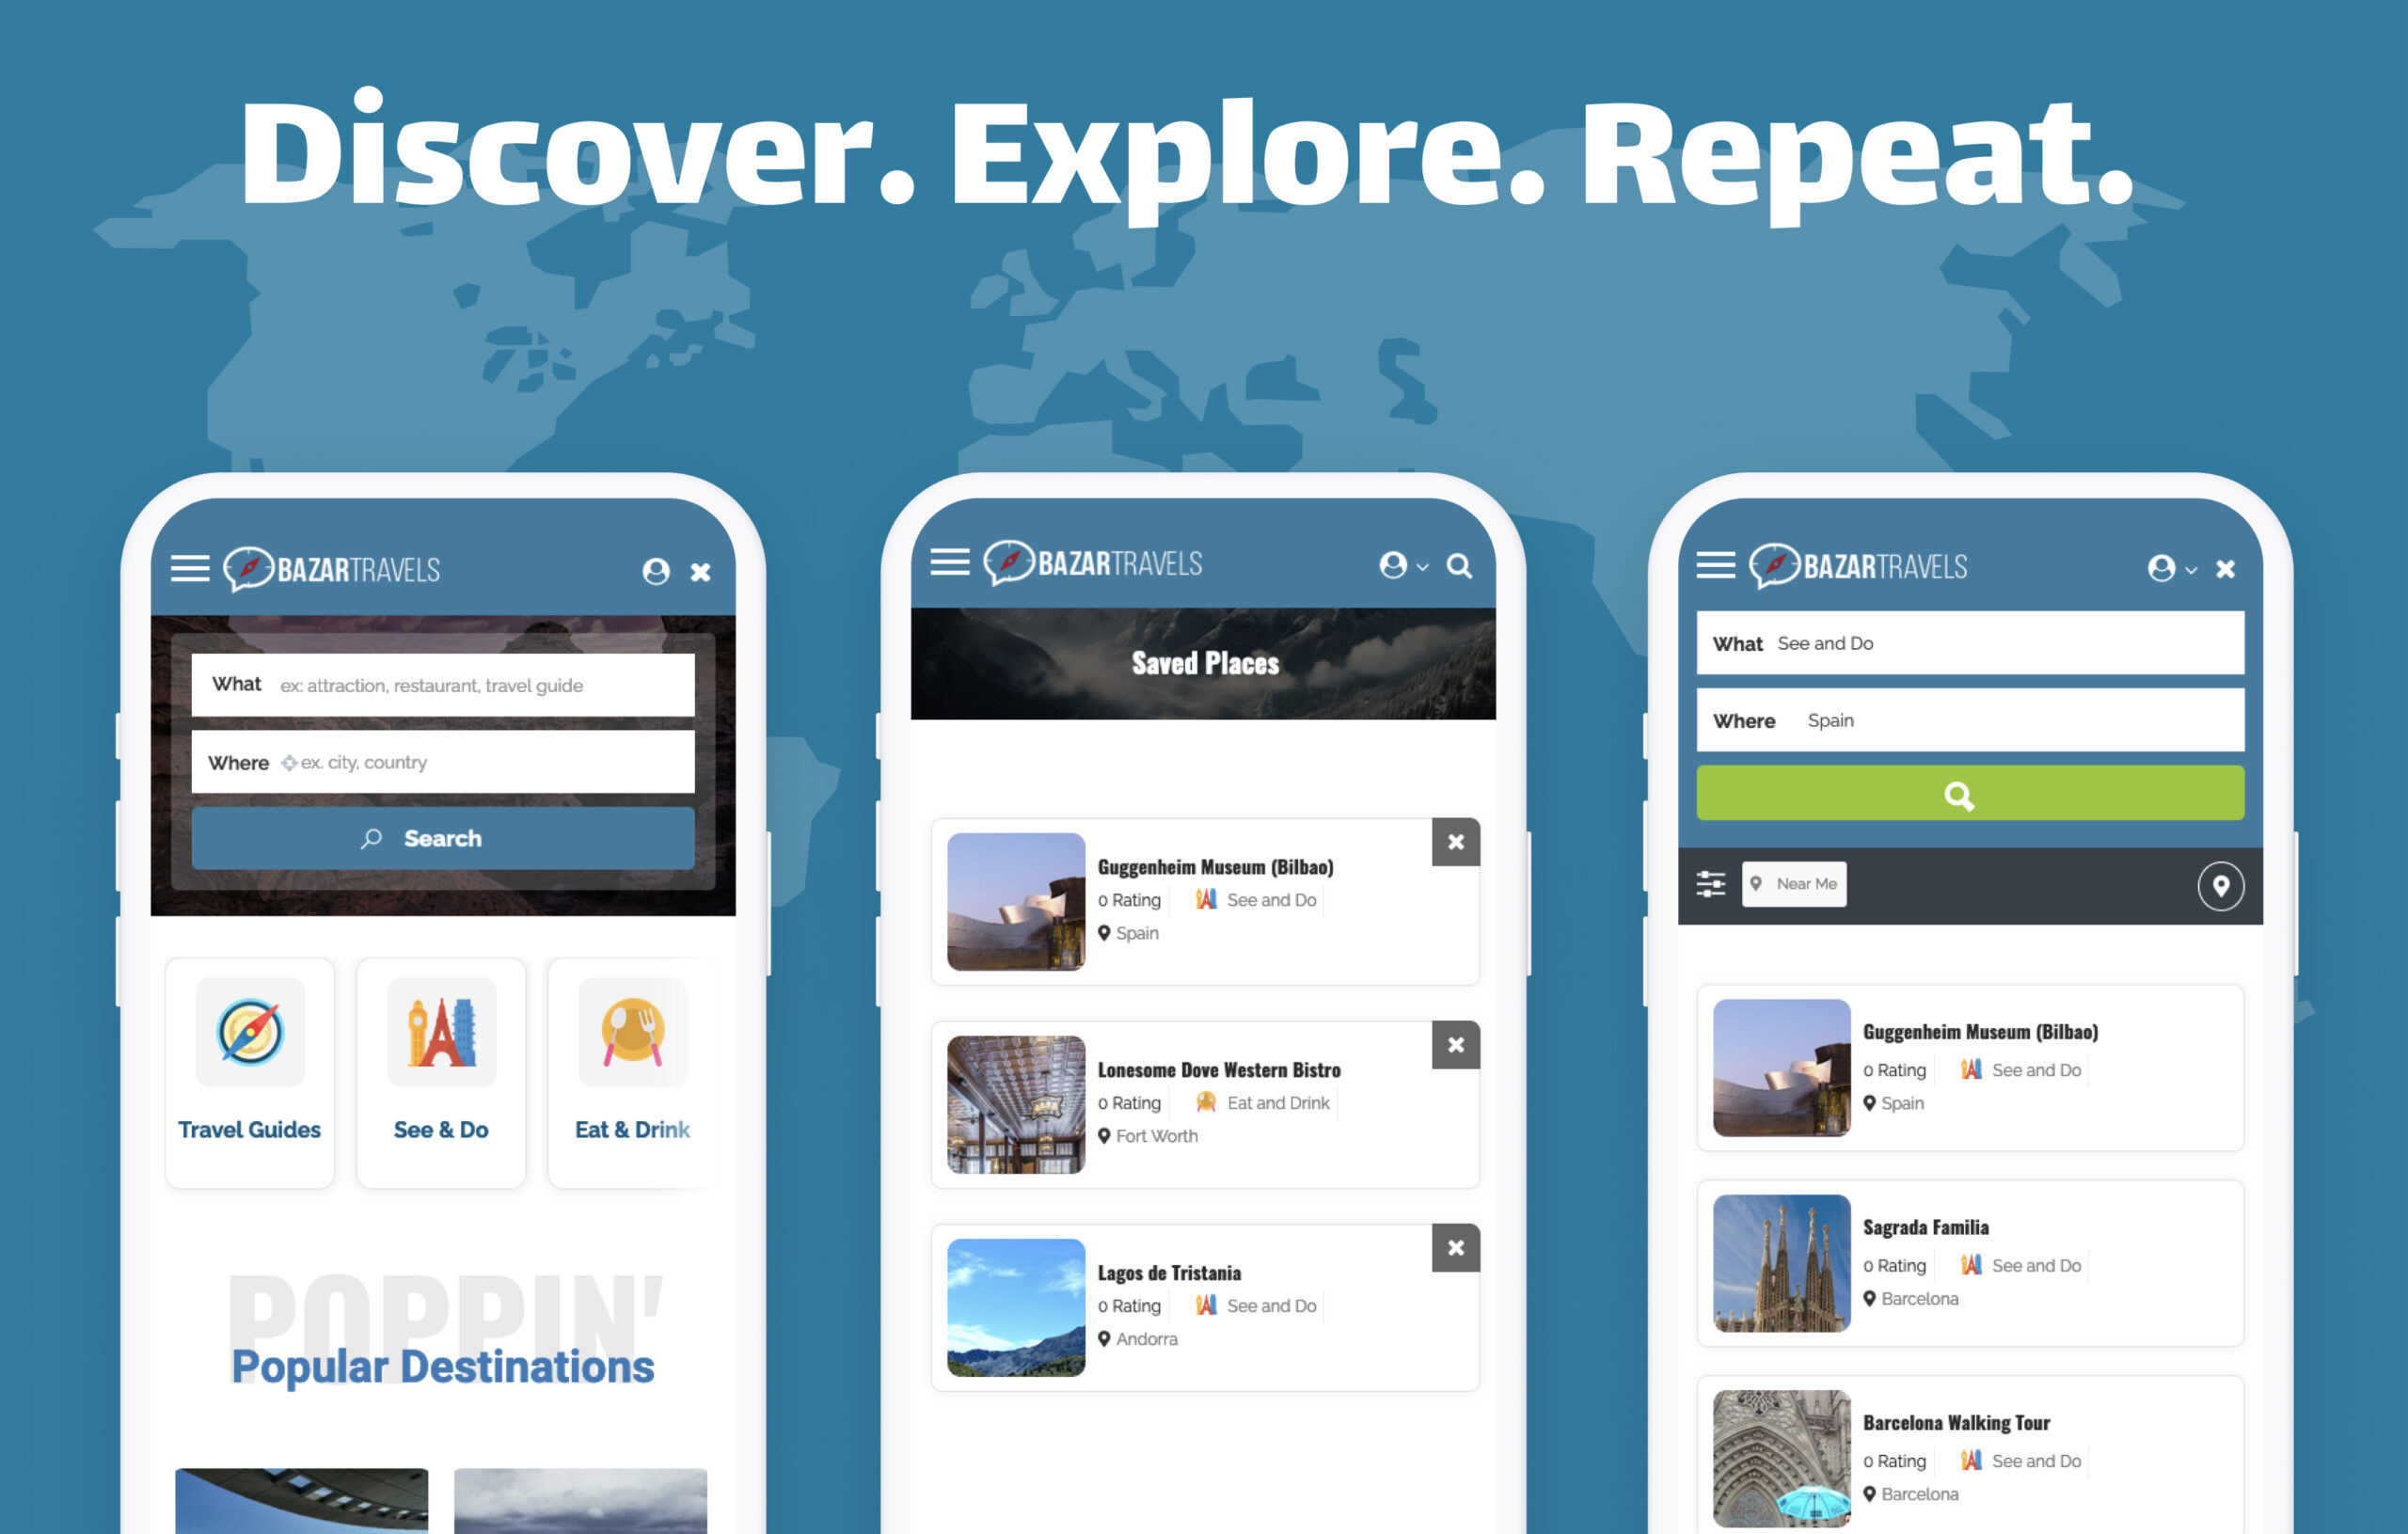 Bazar Travel App – Travel Guides & Destinations